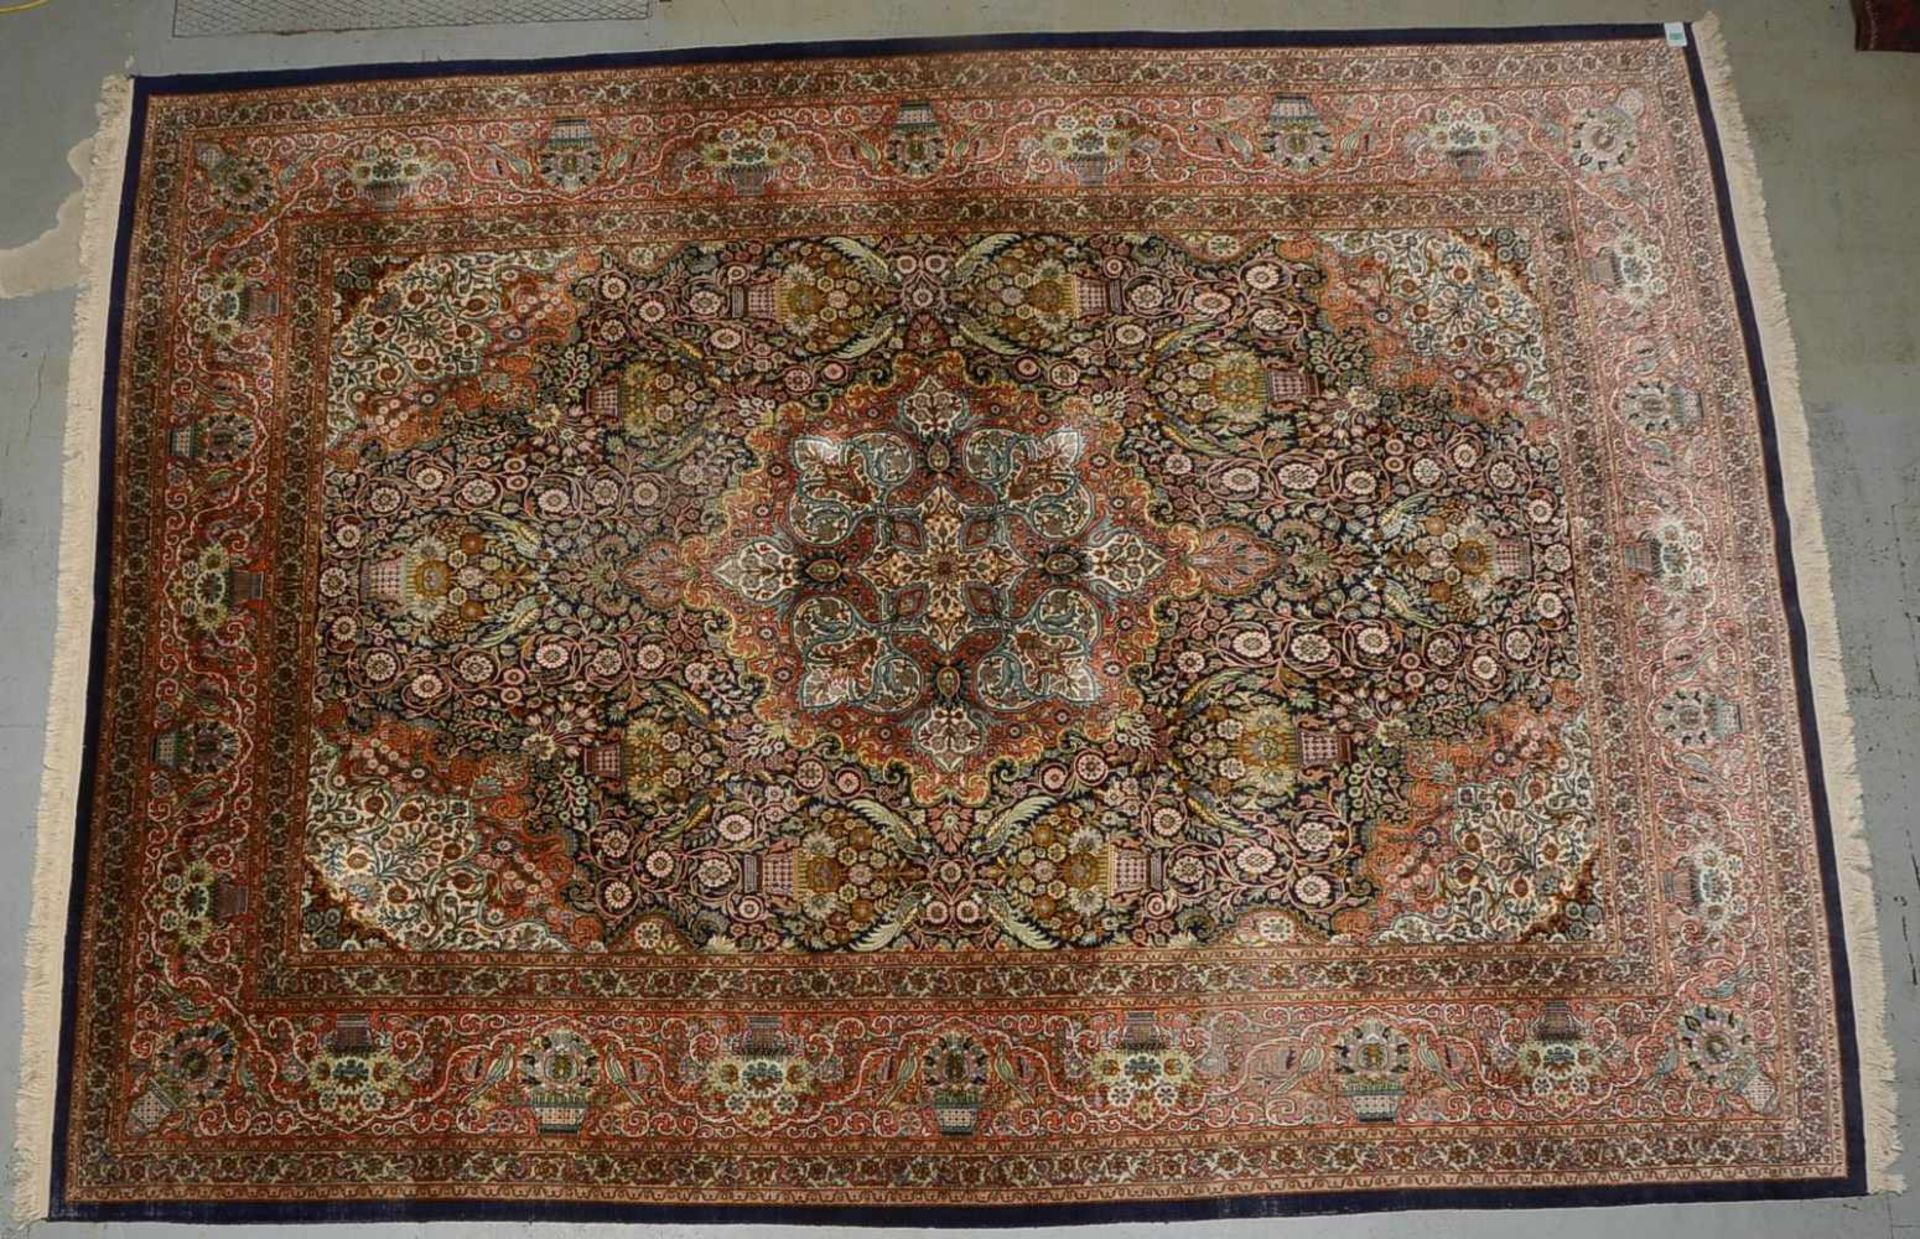 Großer Seidenteppich, Srinagar/Kashmir, feine Knüpfung, ca. 450.000 Knoten/qm, floral gemustert, mit